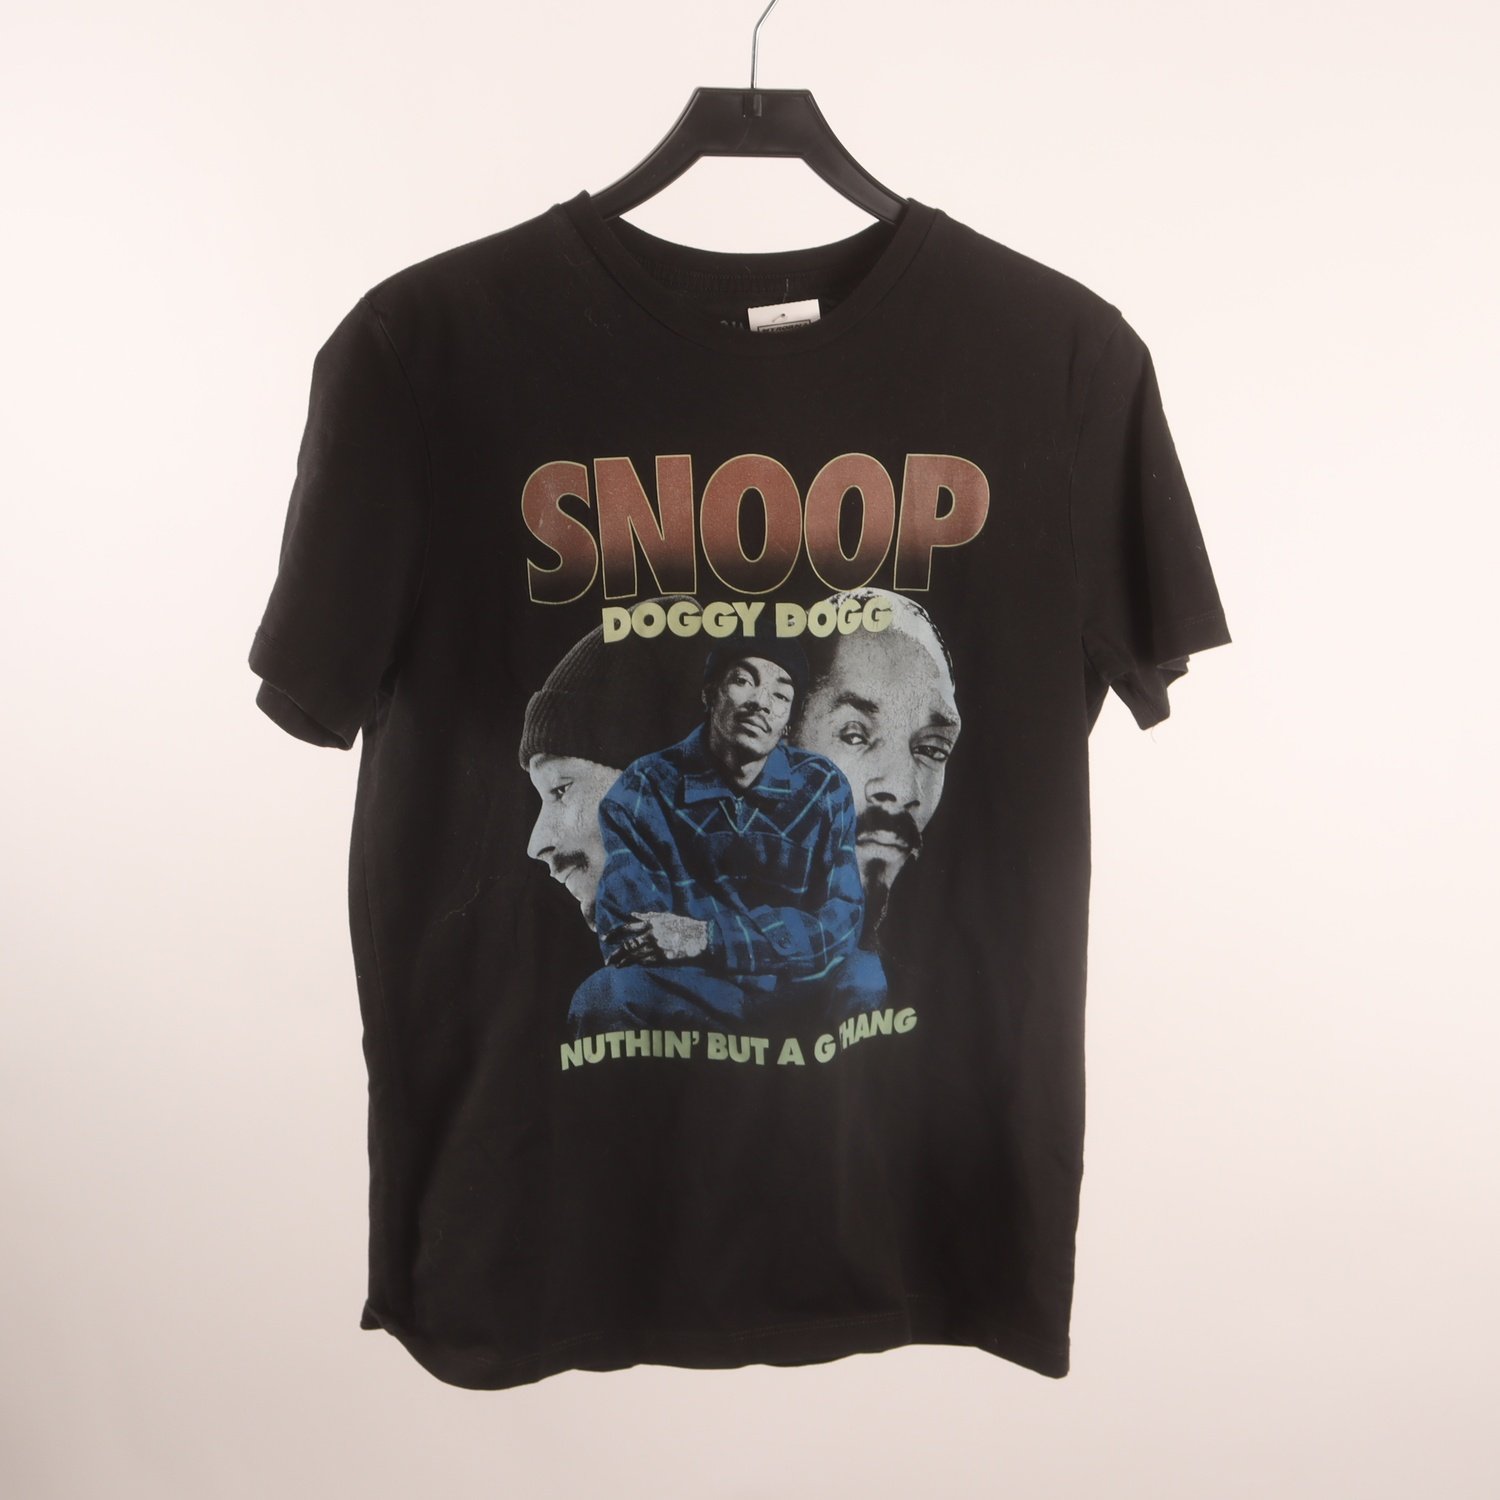 T-shirt, Snoop Doggy Dogg, Nuthin`But A G Thang, svart, stl. M